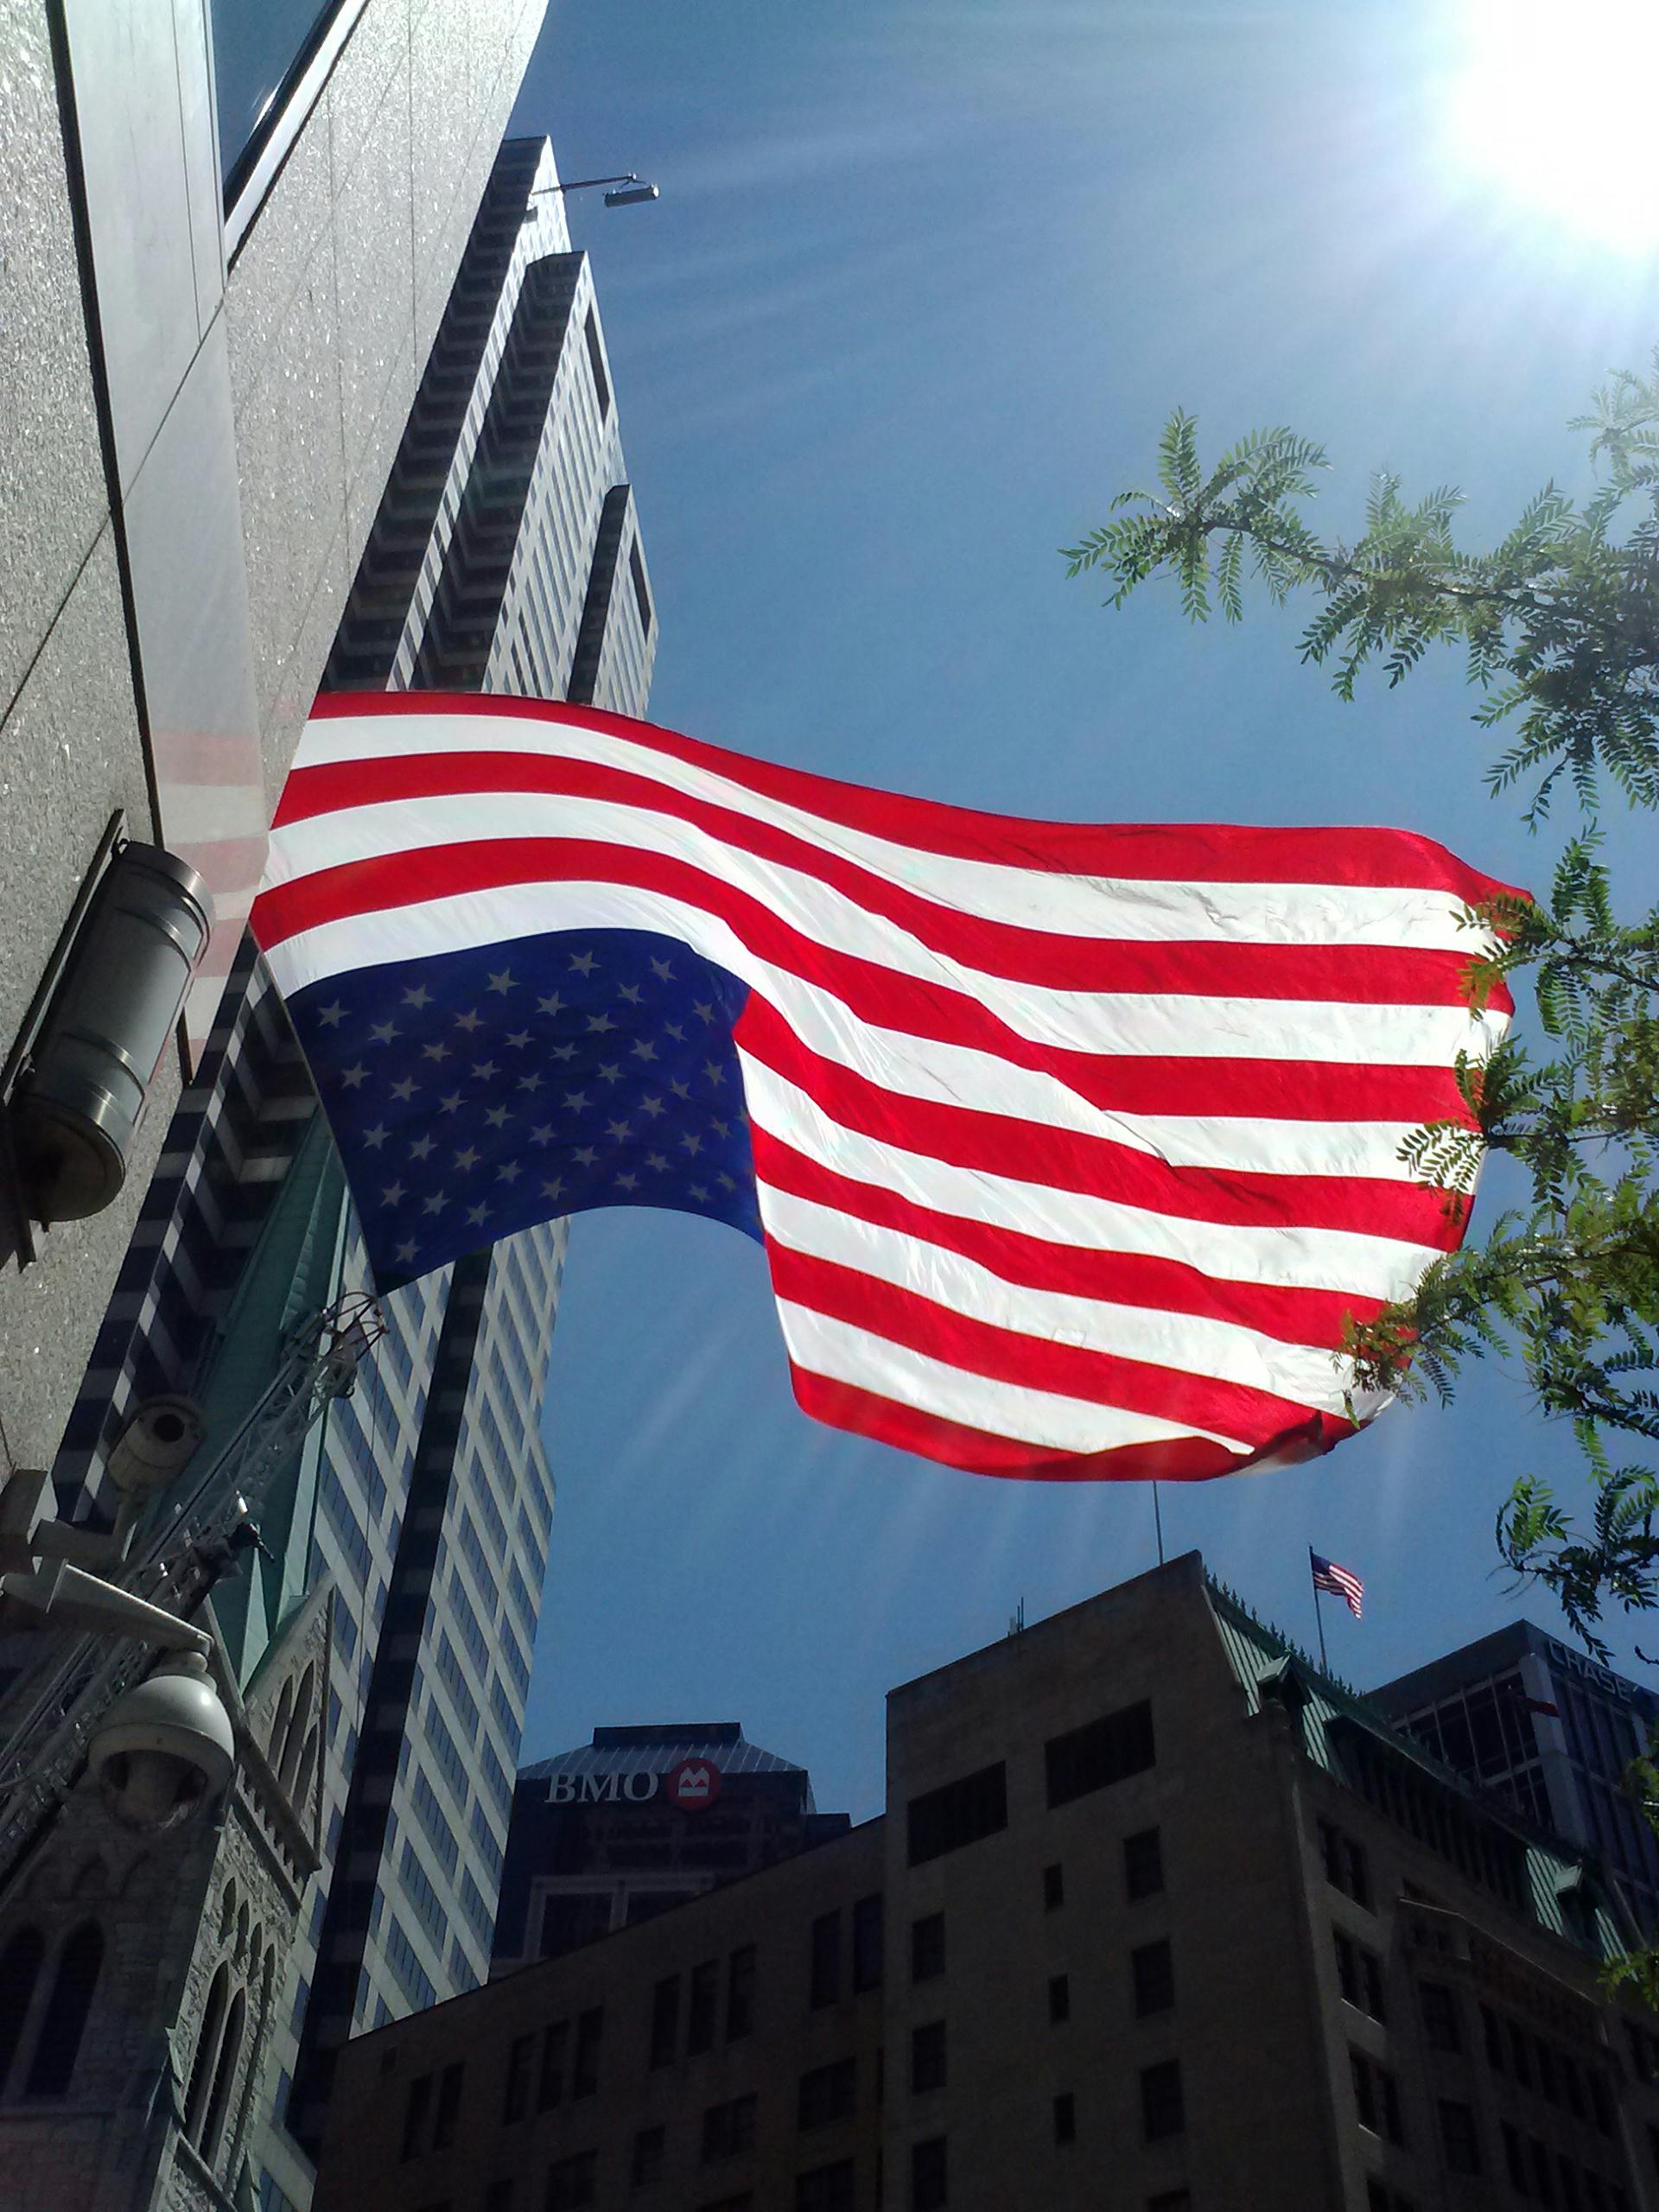 Free stock photo of #Americanflag, #CircleCity, #city